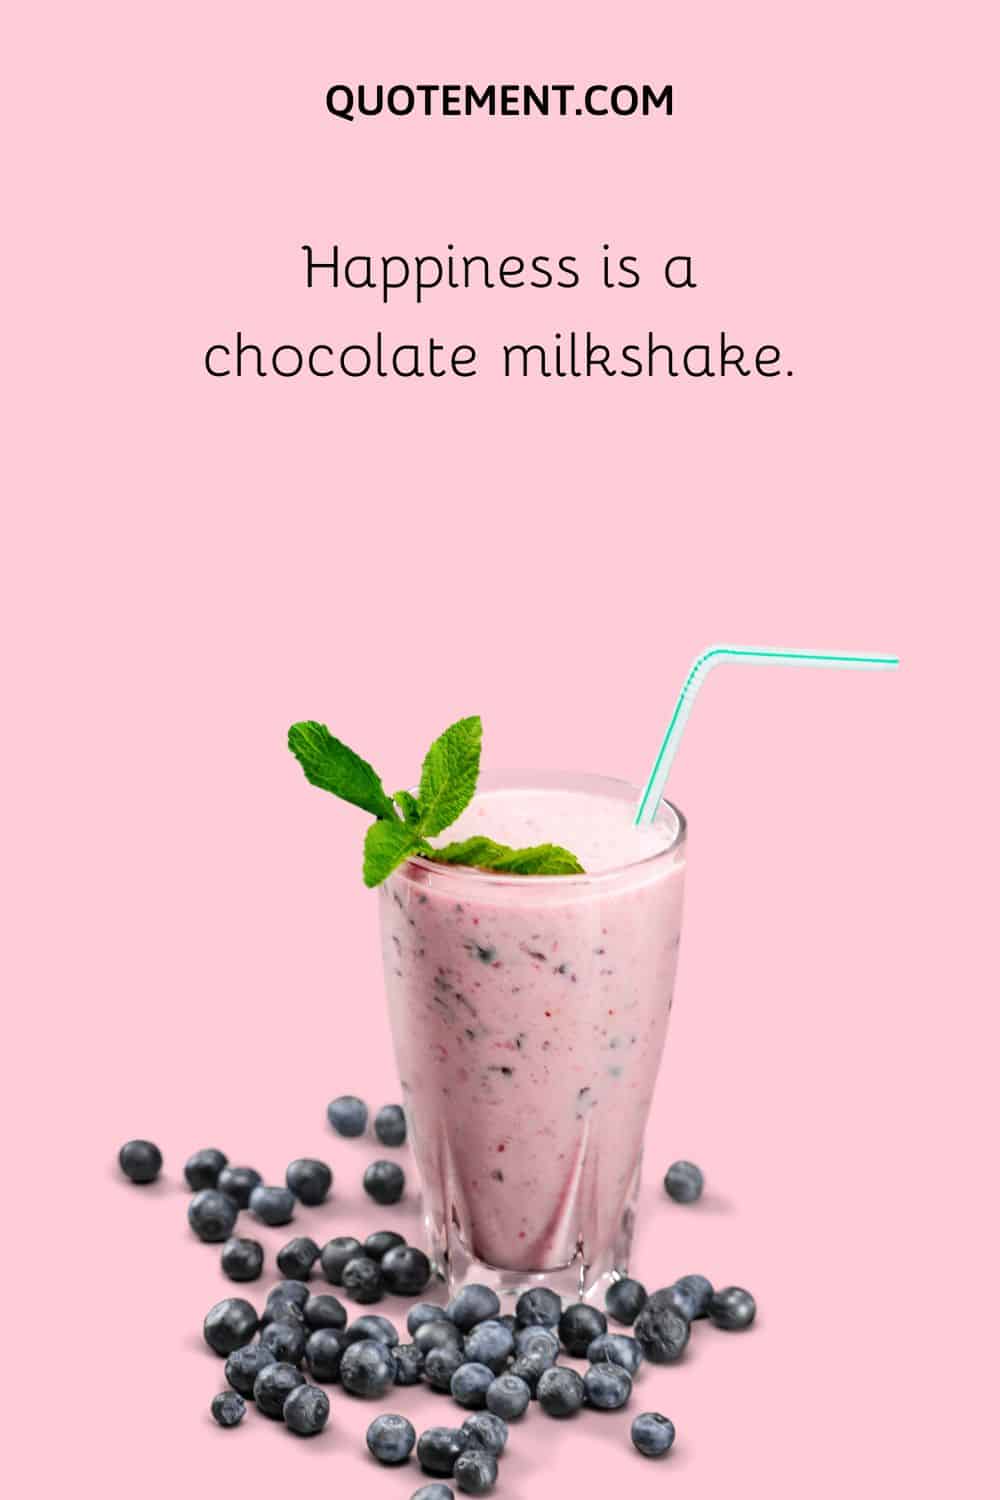 Happiness is a chocolate milkshake.